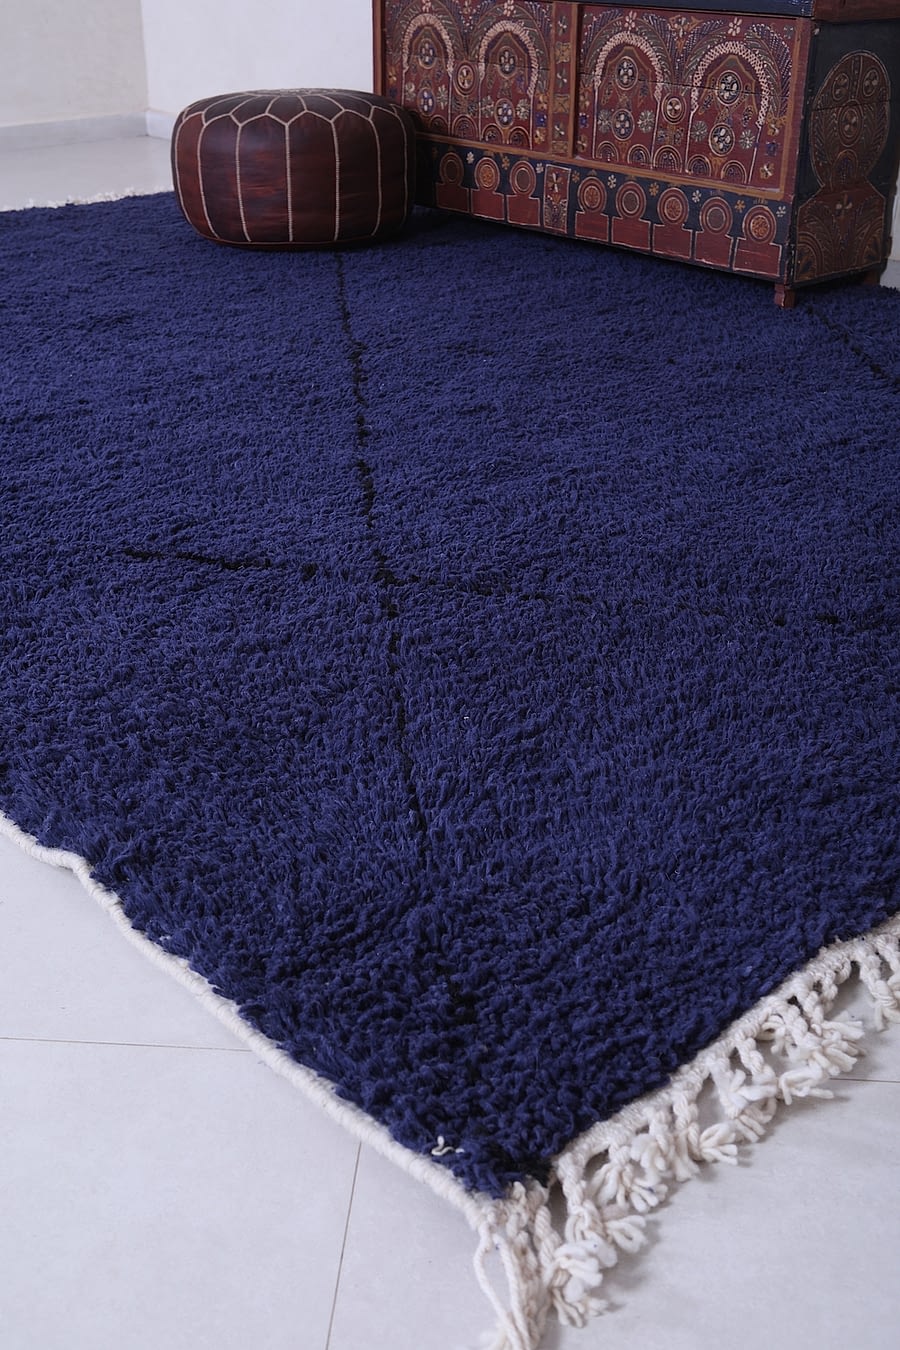 All wool handmade carpet